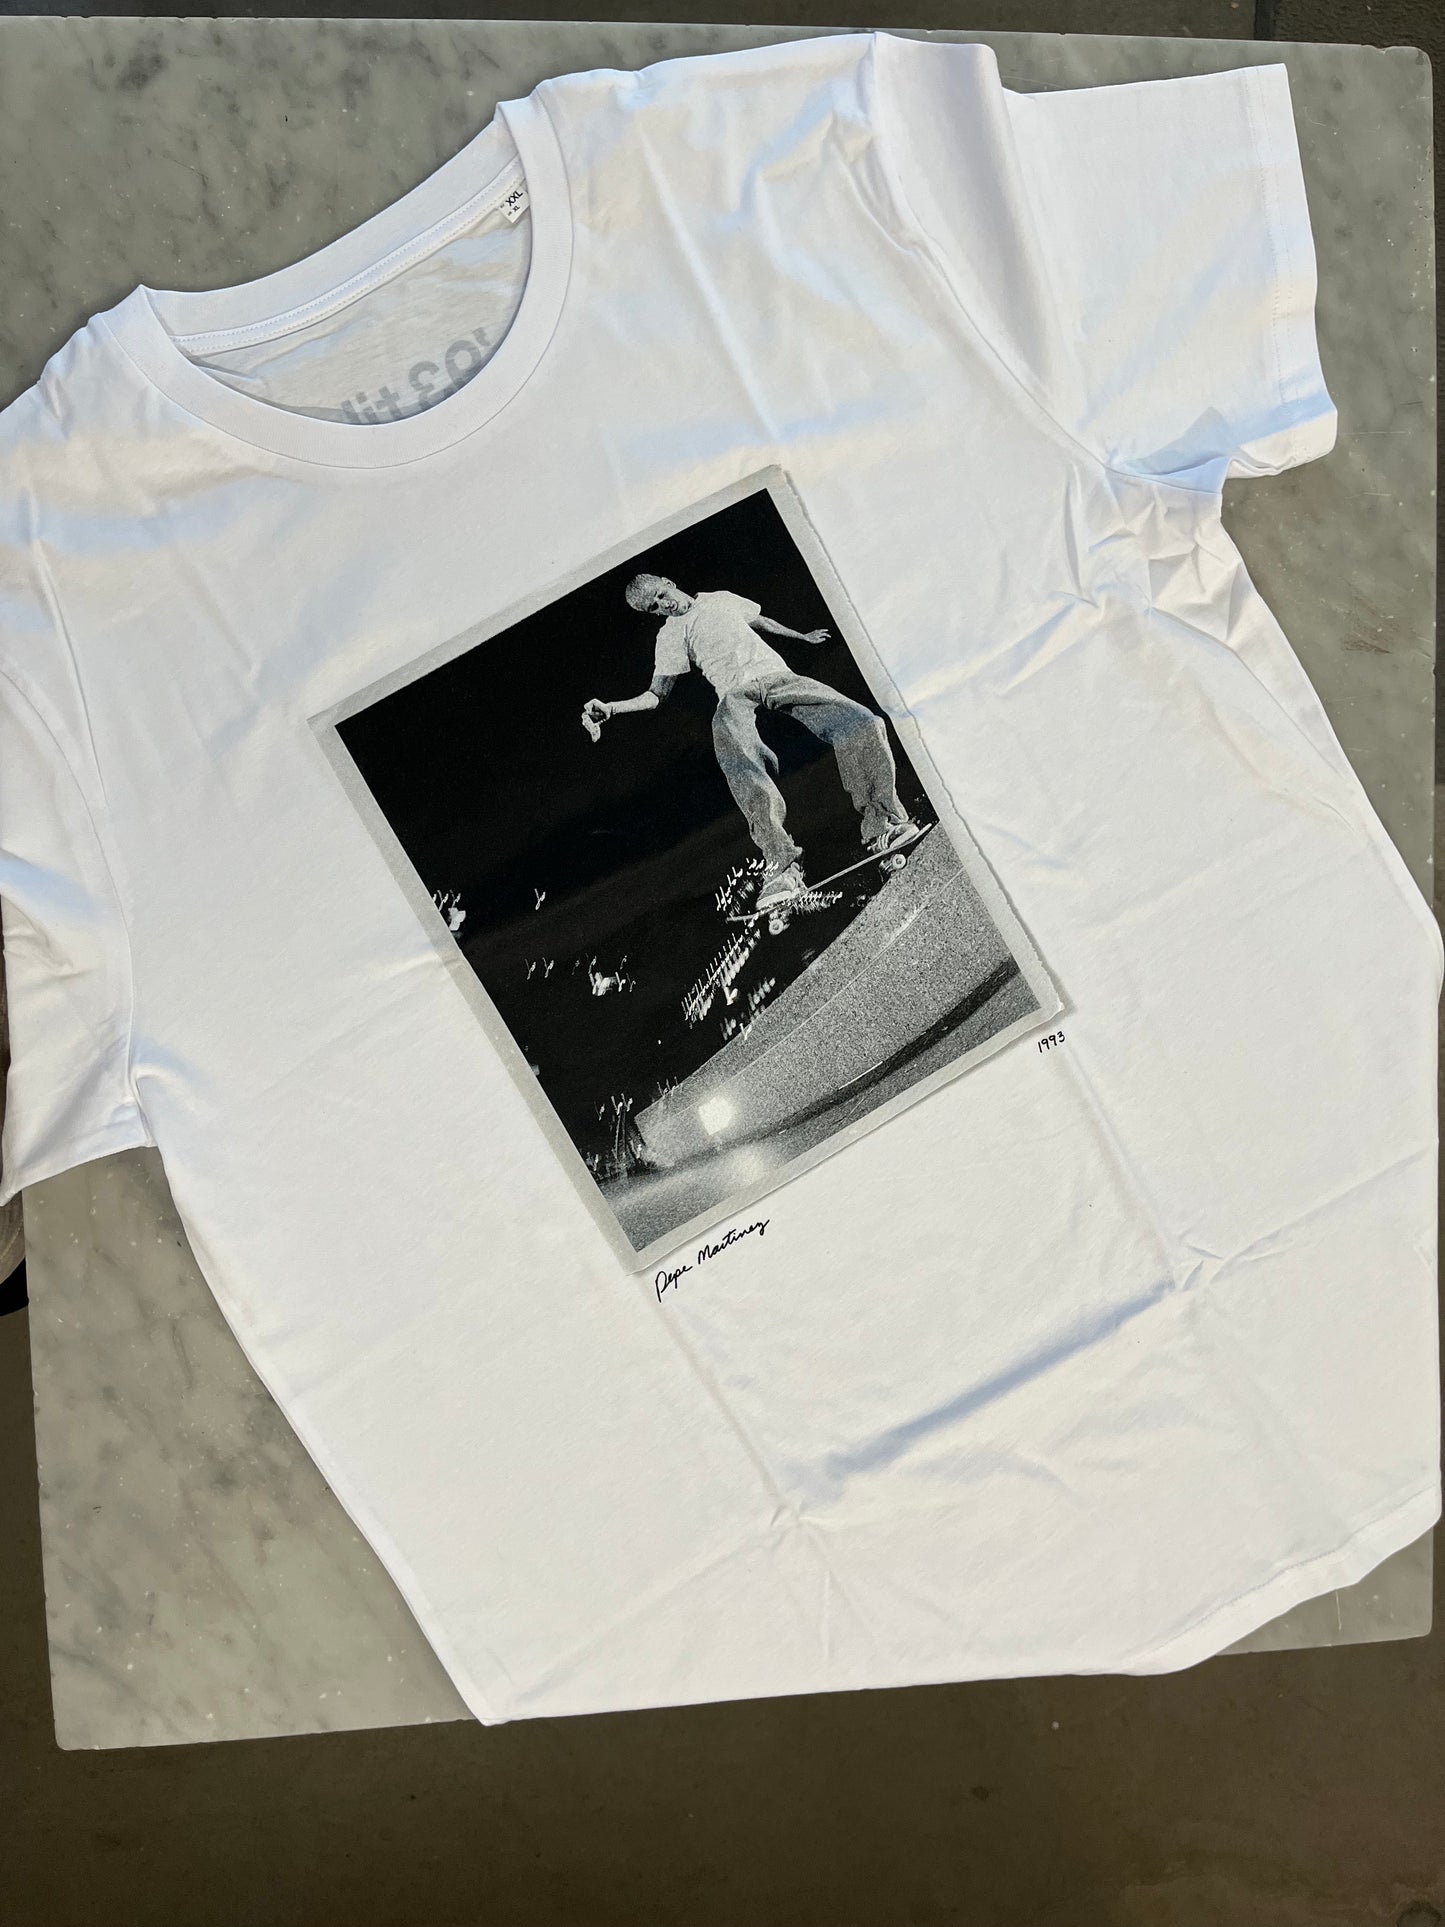 Pepe Matinez Tribute T-Shirt